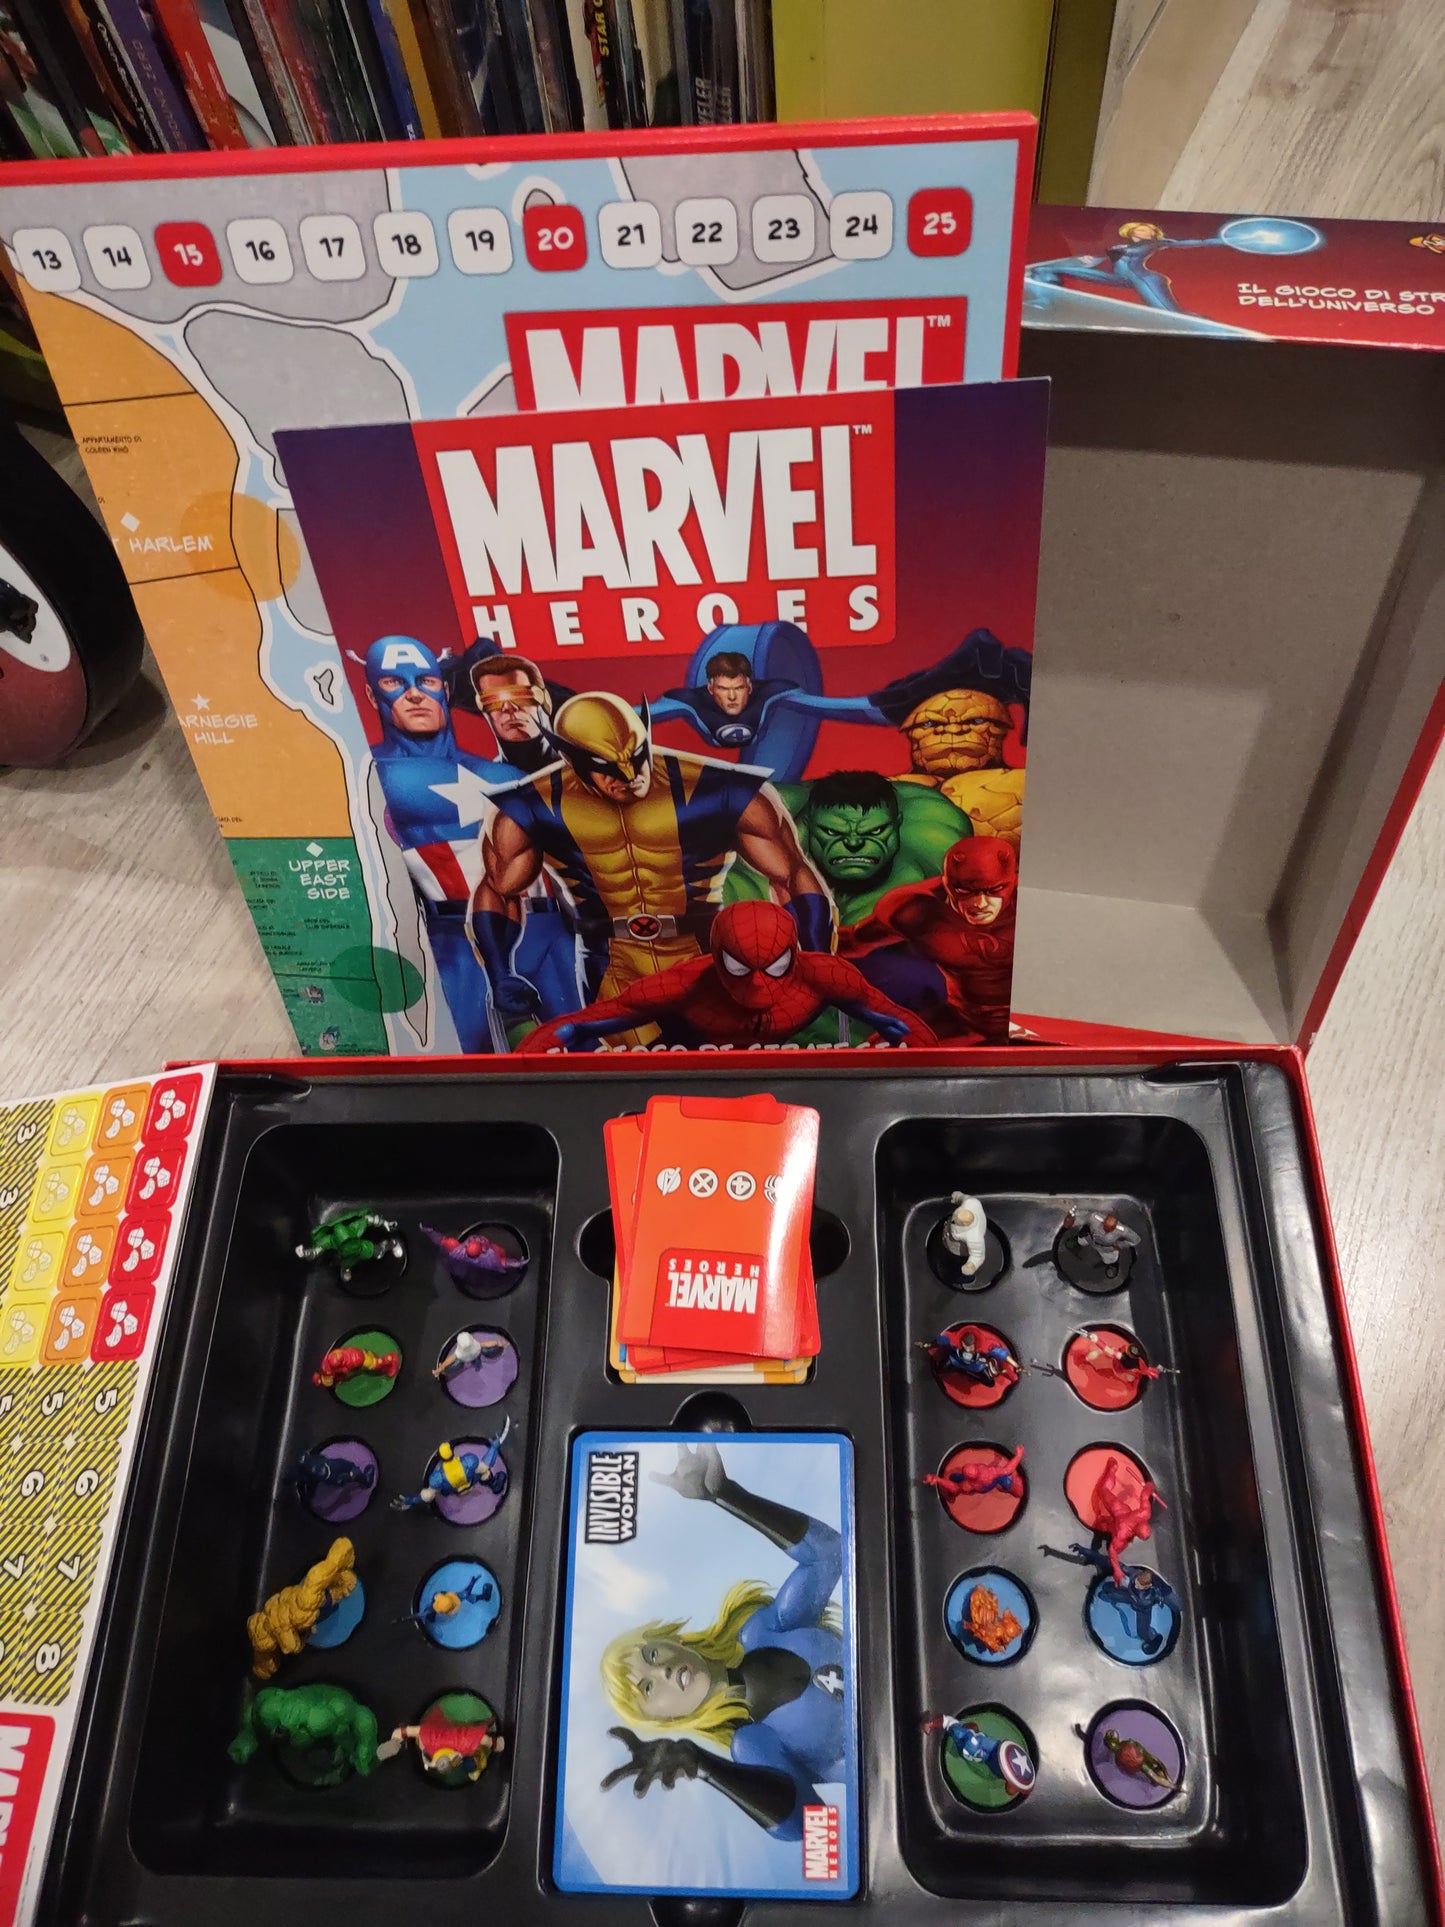 Gioco da tavolo Marvel Heroes con 20 miniature dipinte